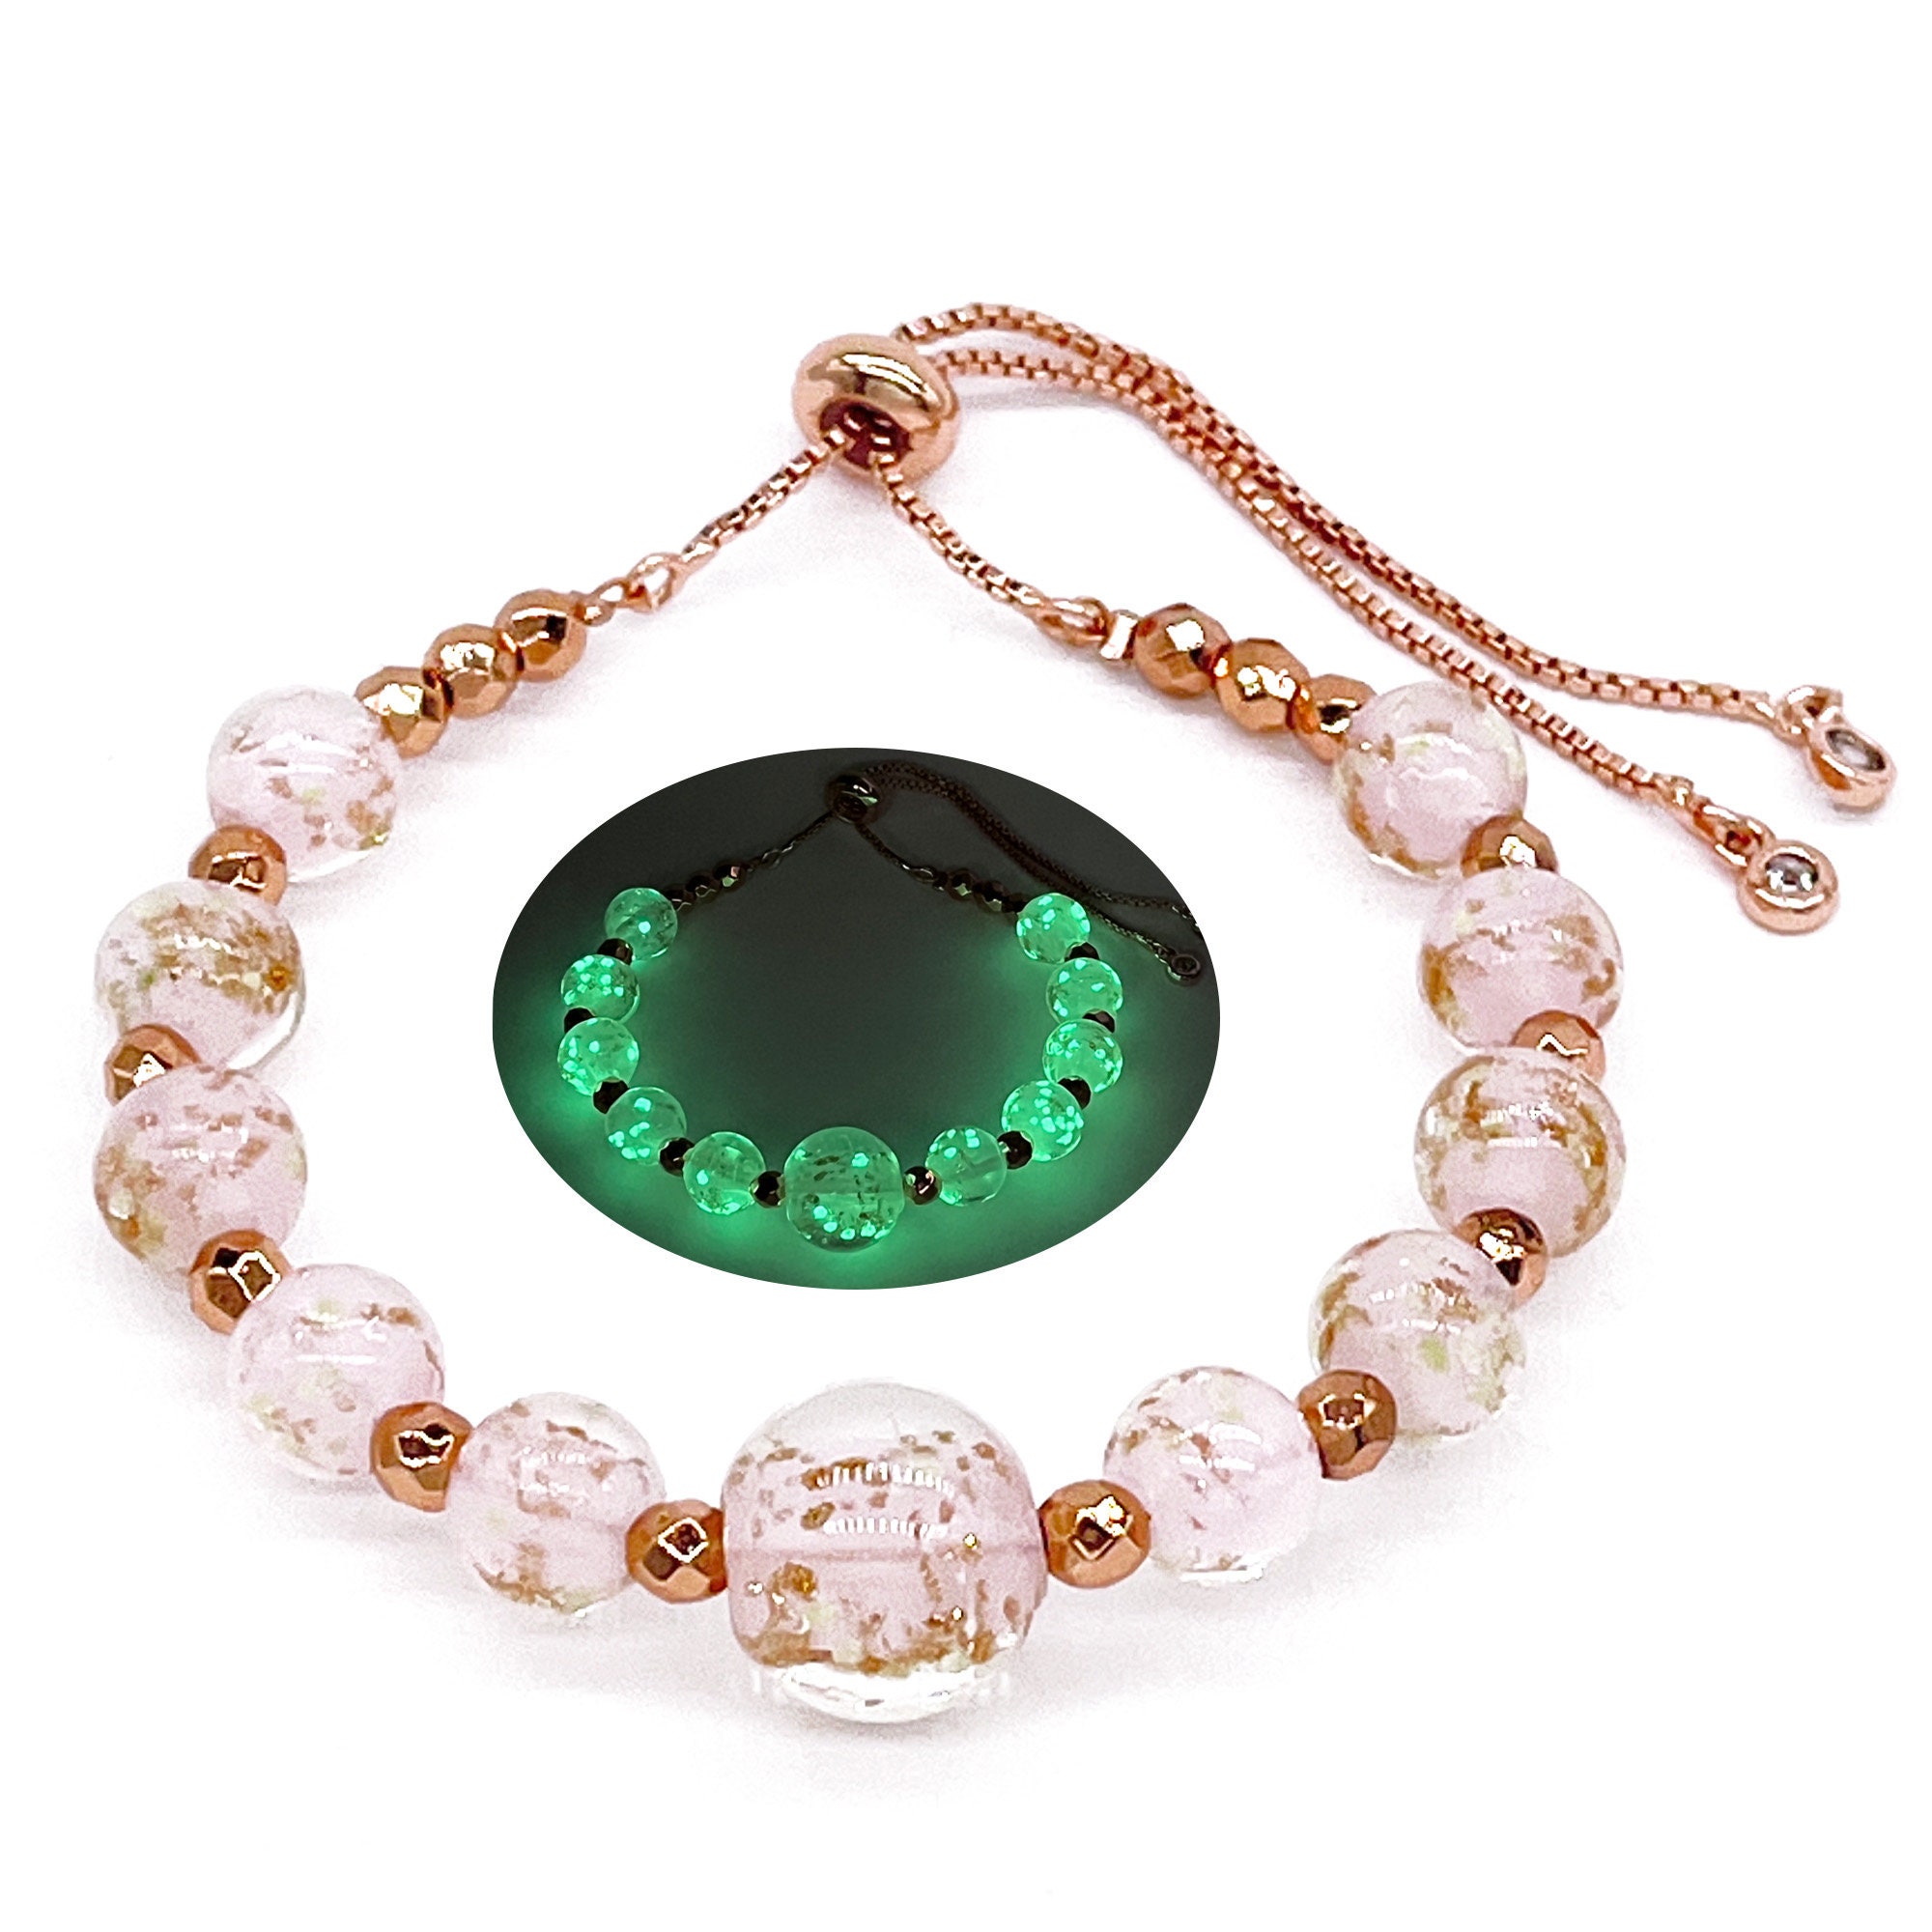 ARTSY Crafts Glow in The Dark Beaded Bracelet, Handcrafted Luminous Beads  Chakra Bracelet for Women Men, 12mm Murano Glass Beads 7 Chakras Healing